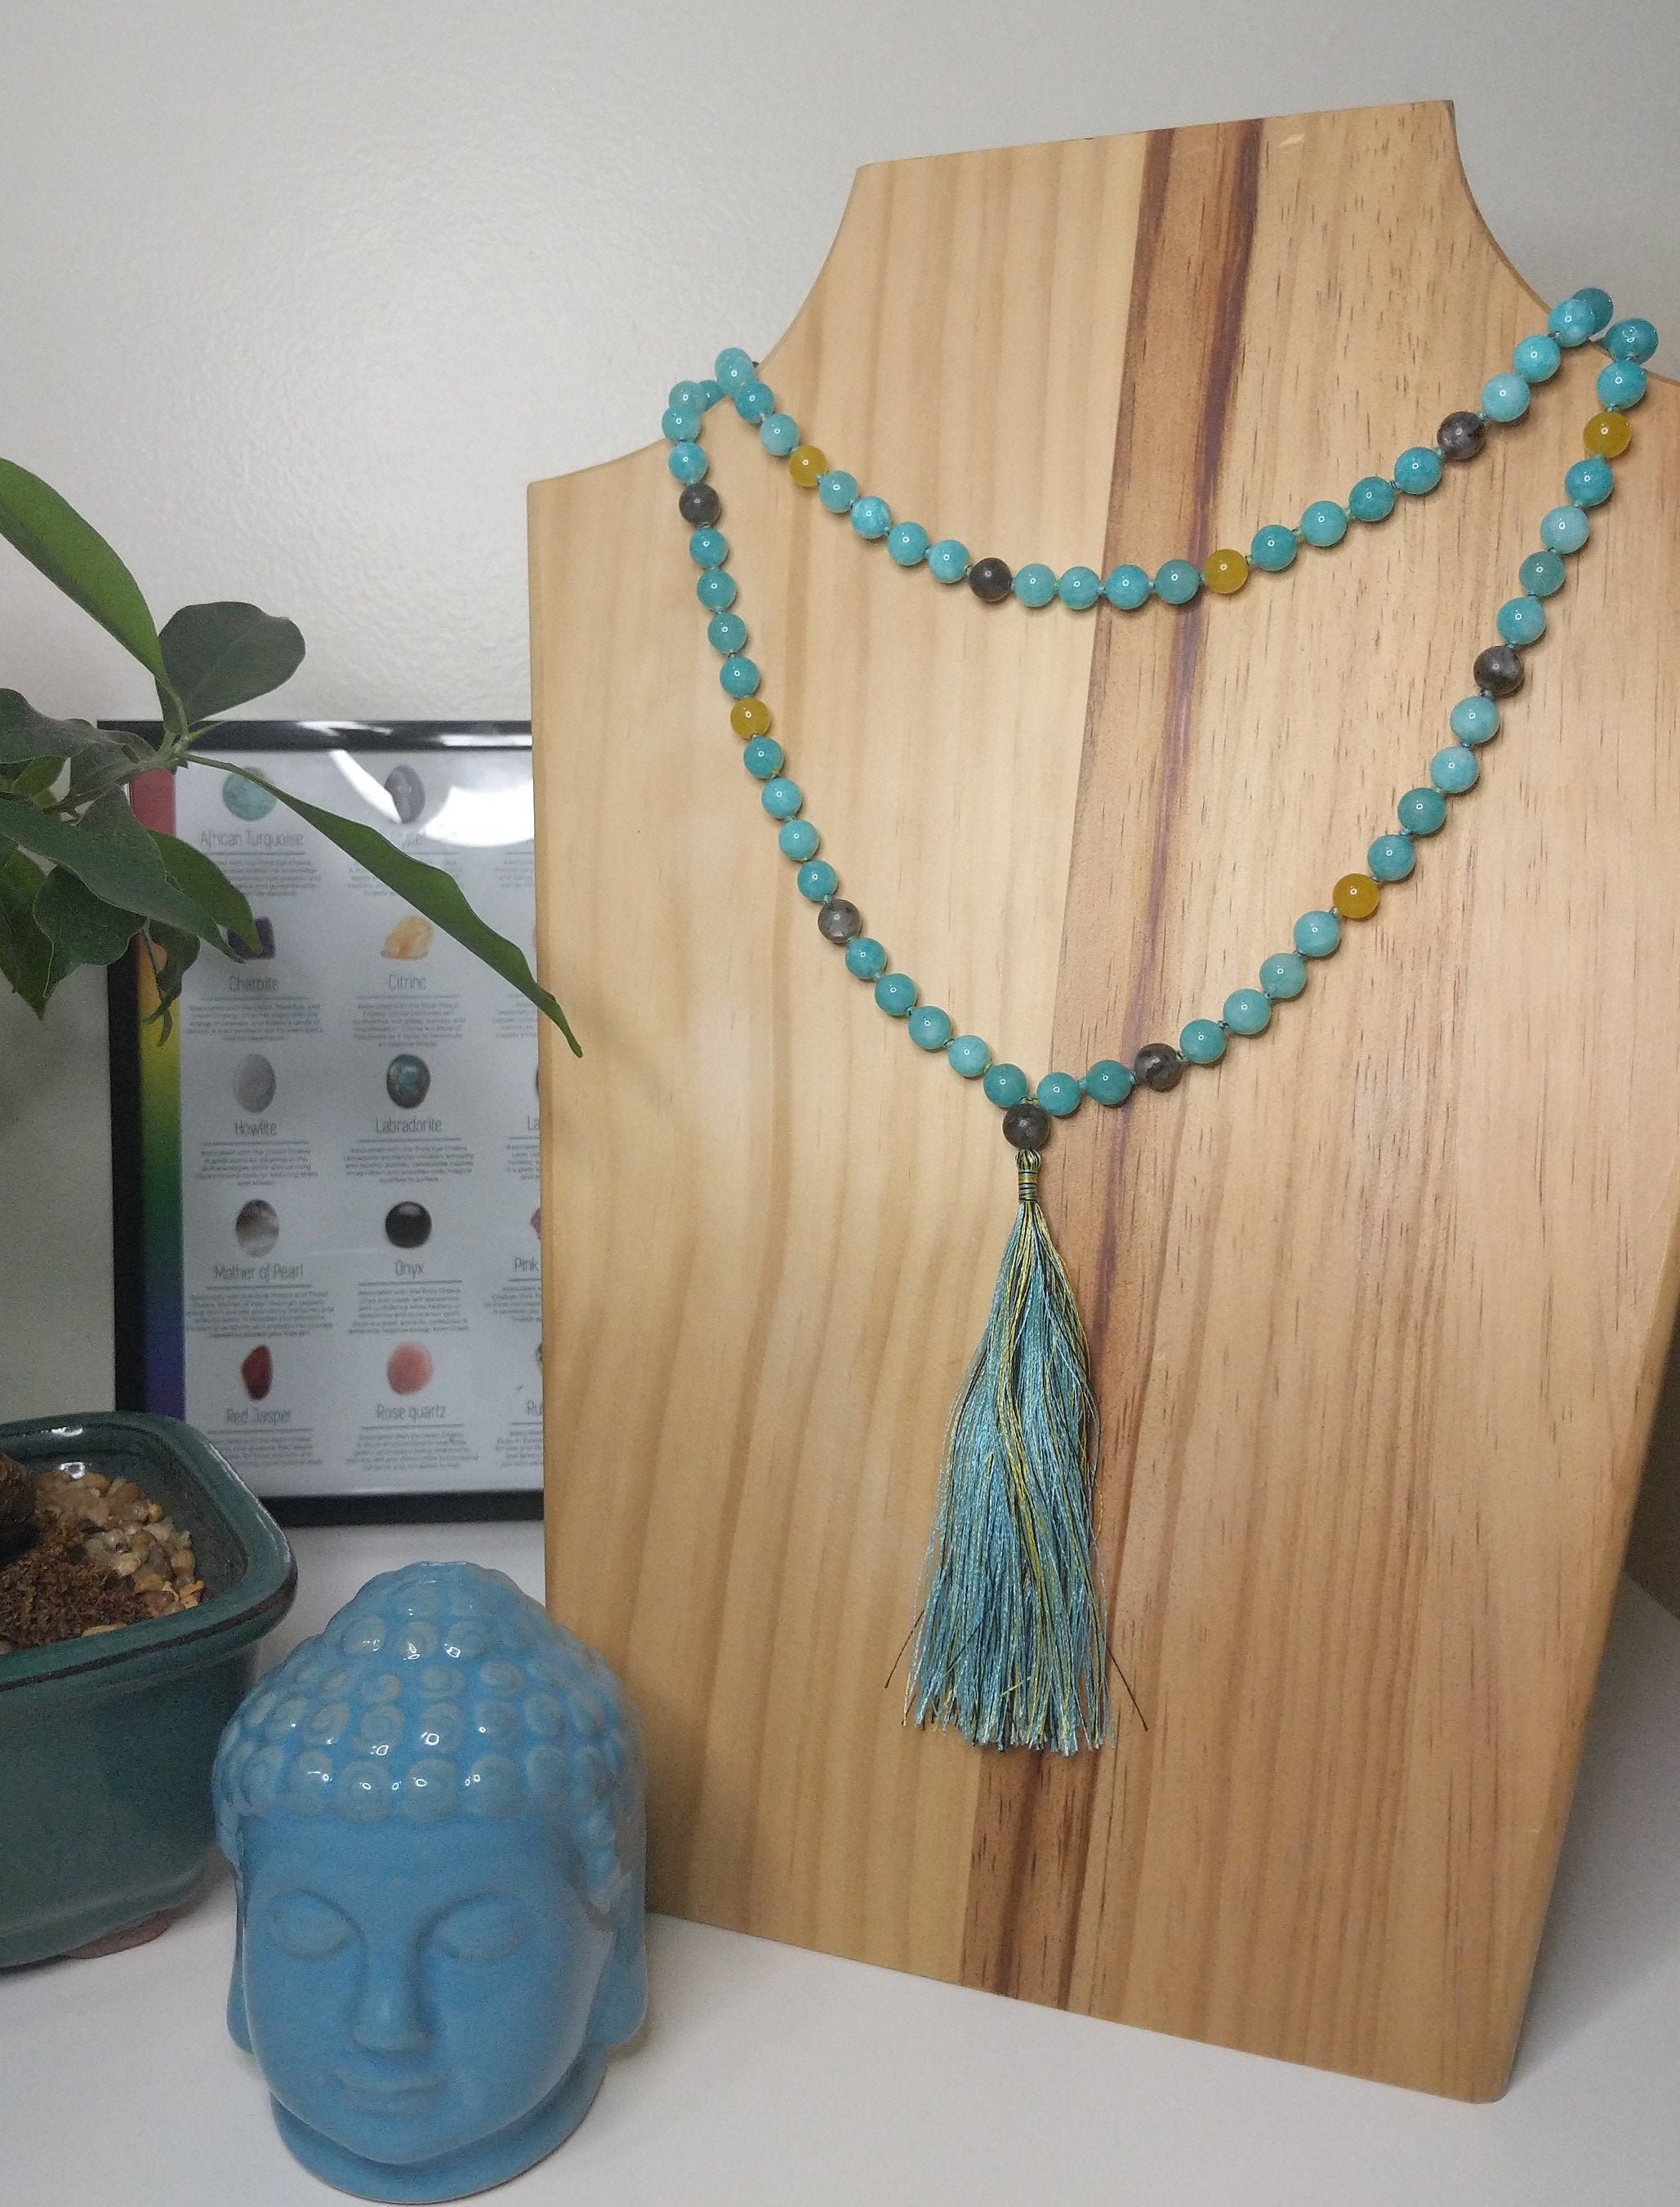 108 Mala Beads Necklace, Prayer Beads, Meditation beads of 8 mm Healin –  Tibet Tree of Life